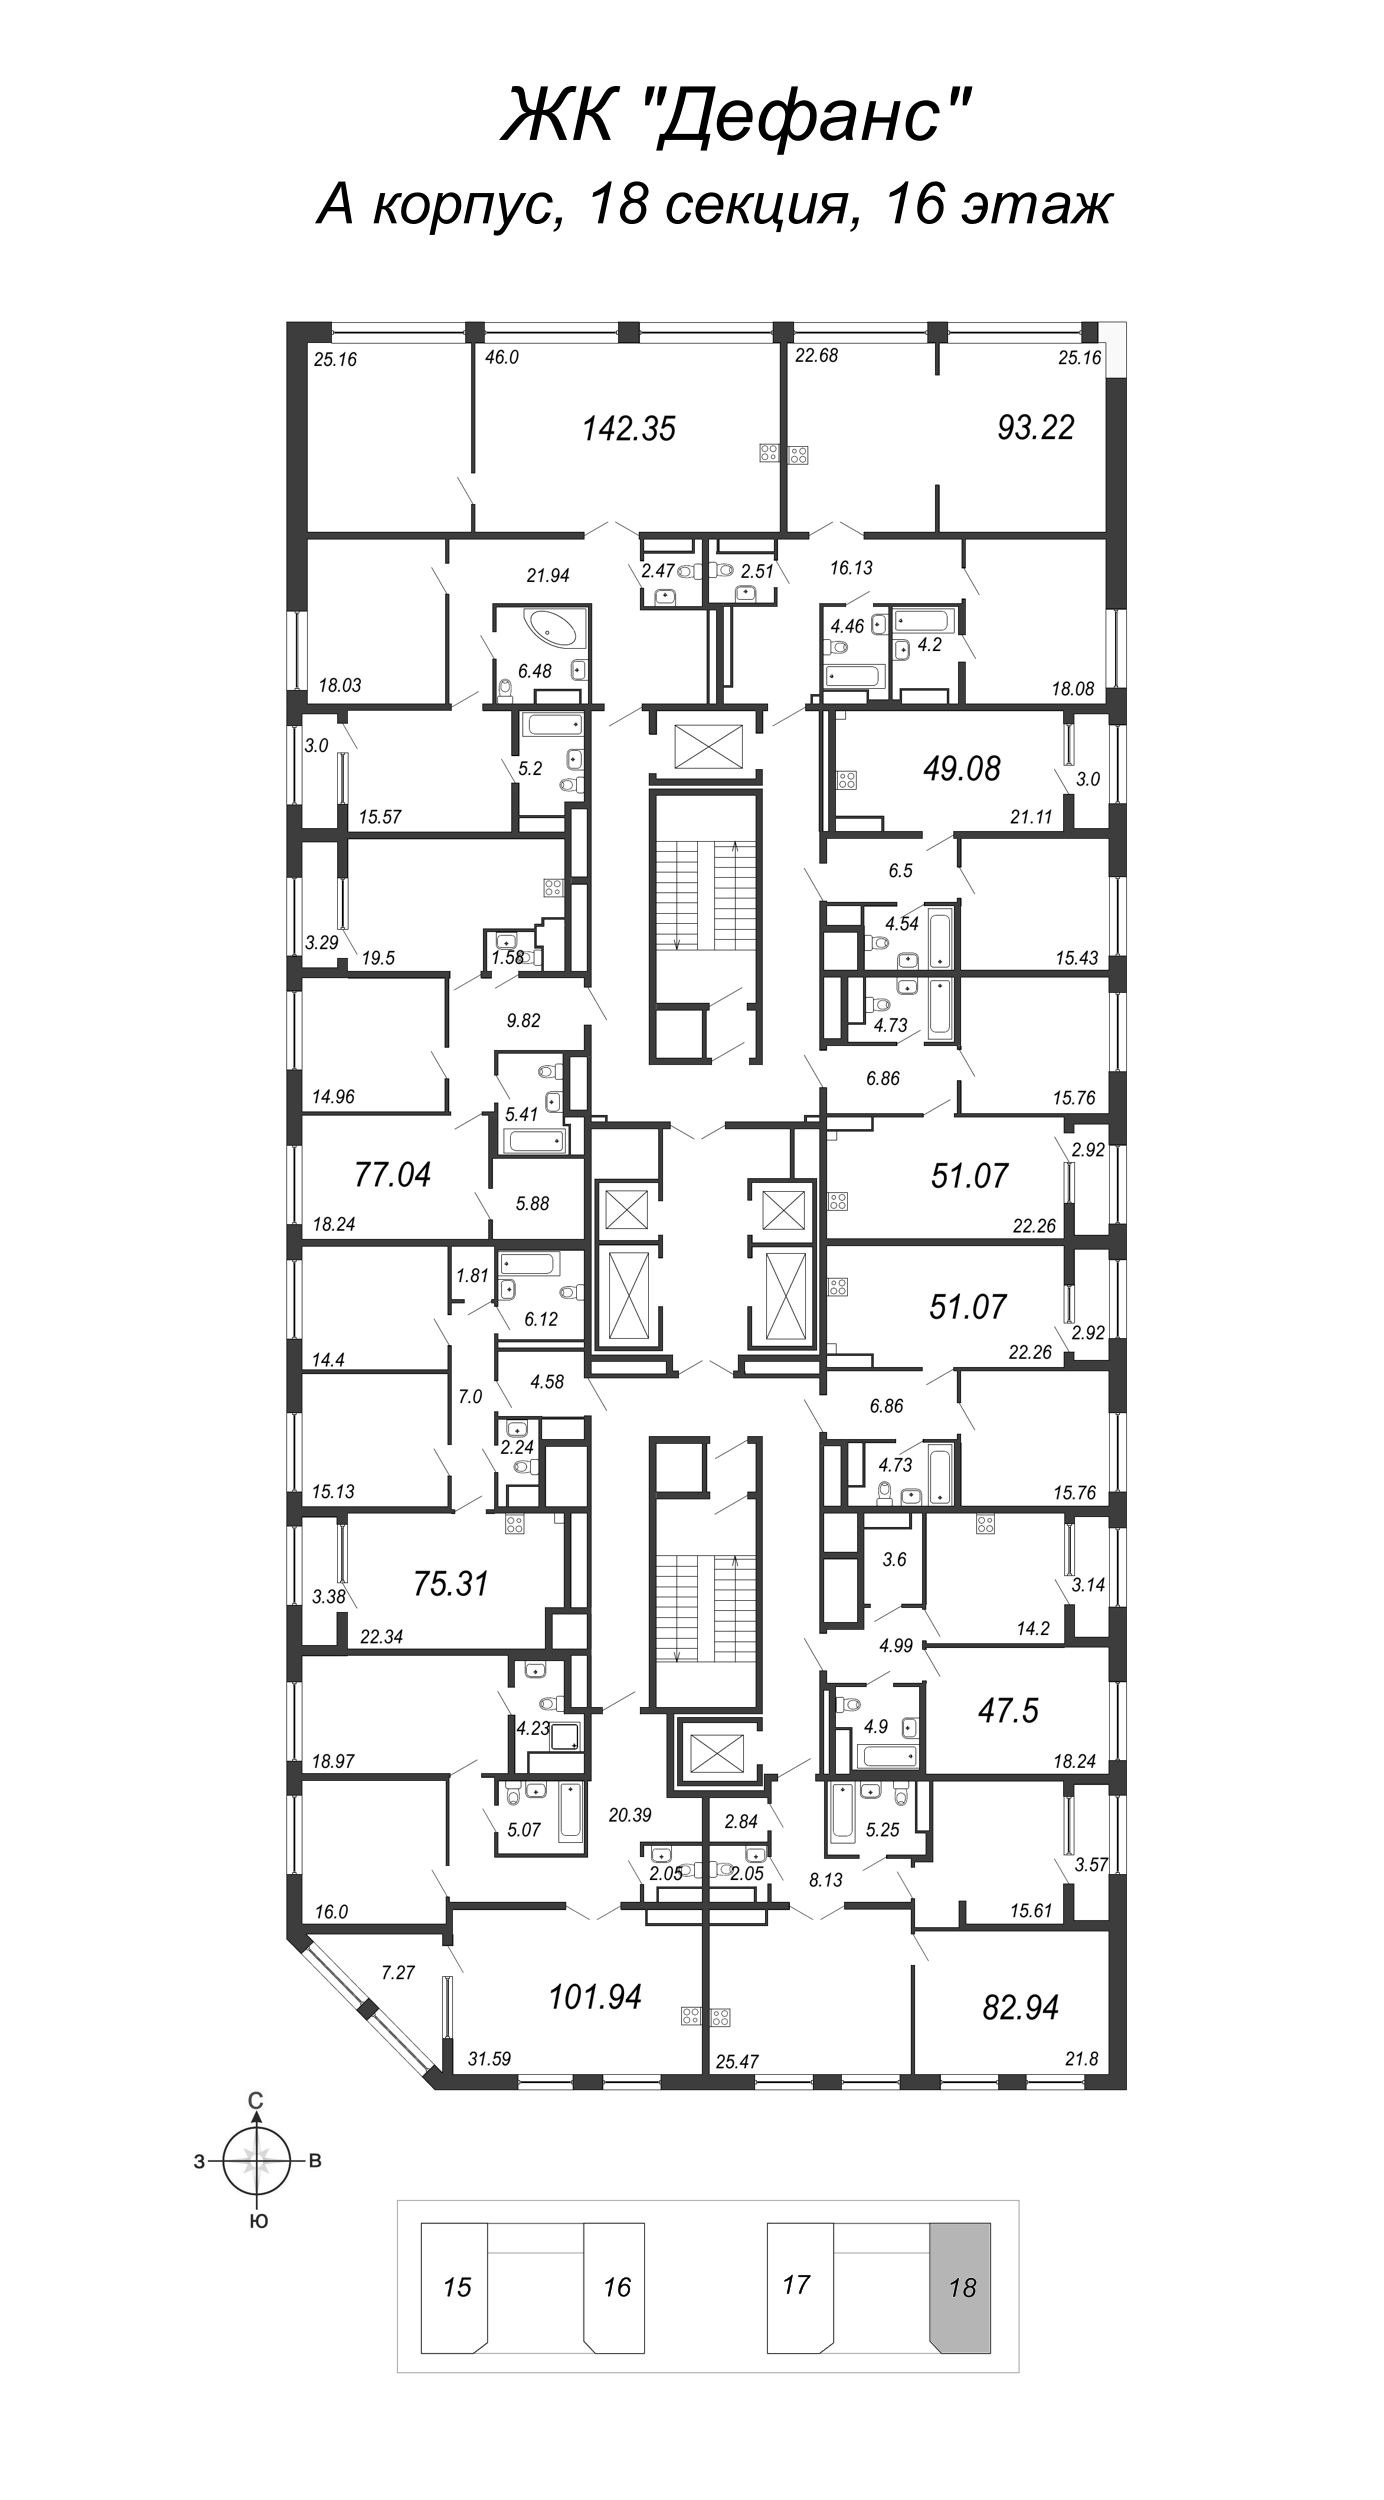 4-комнатная (Евро) квартира, 142.35 м² - планировка этажа